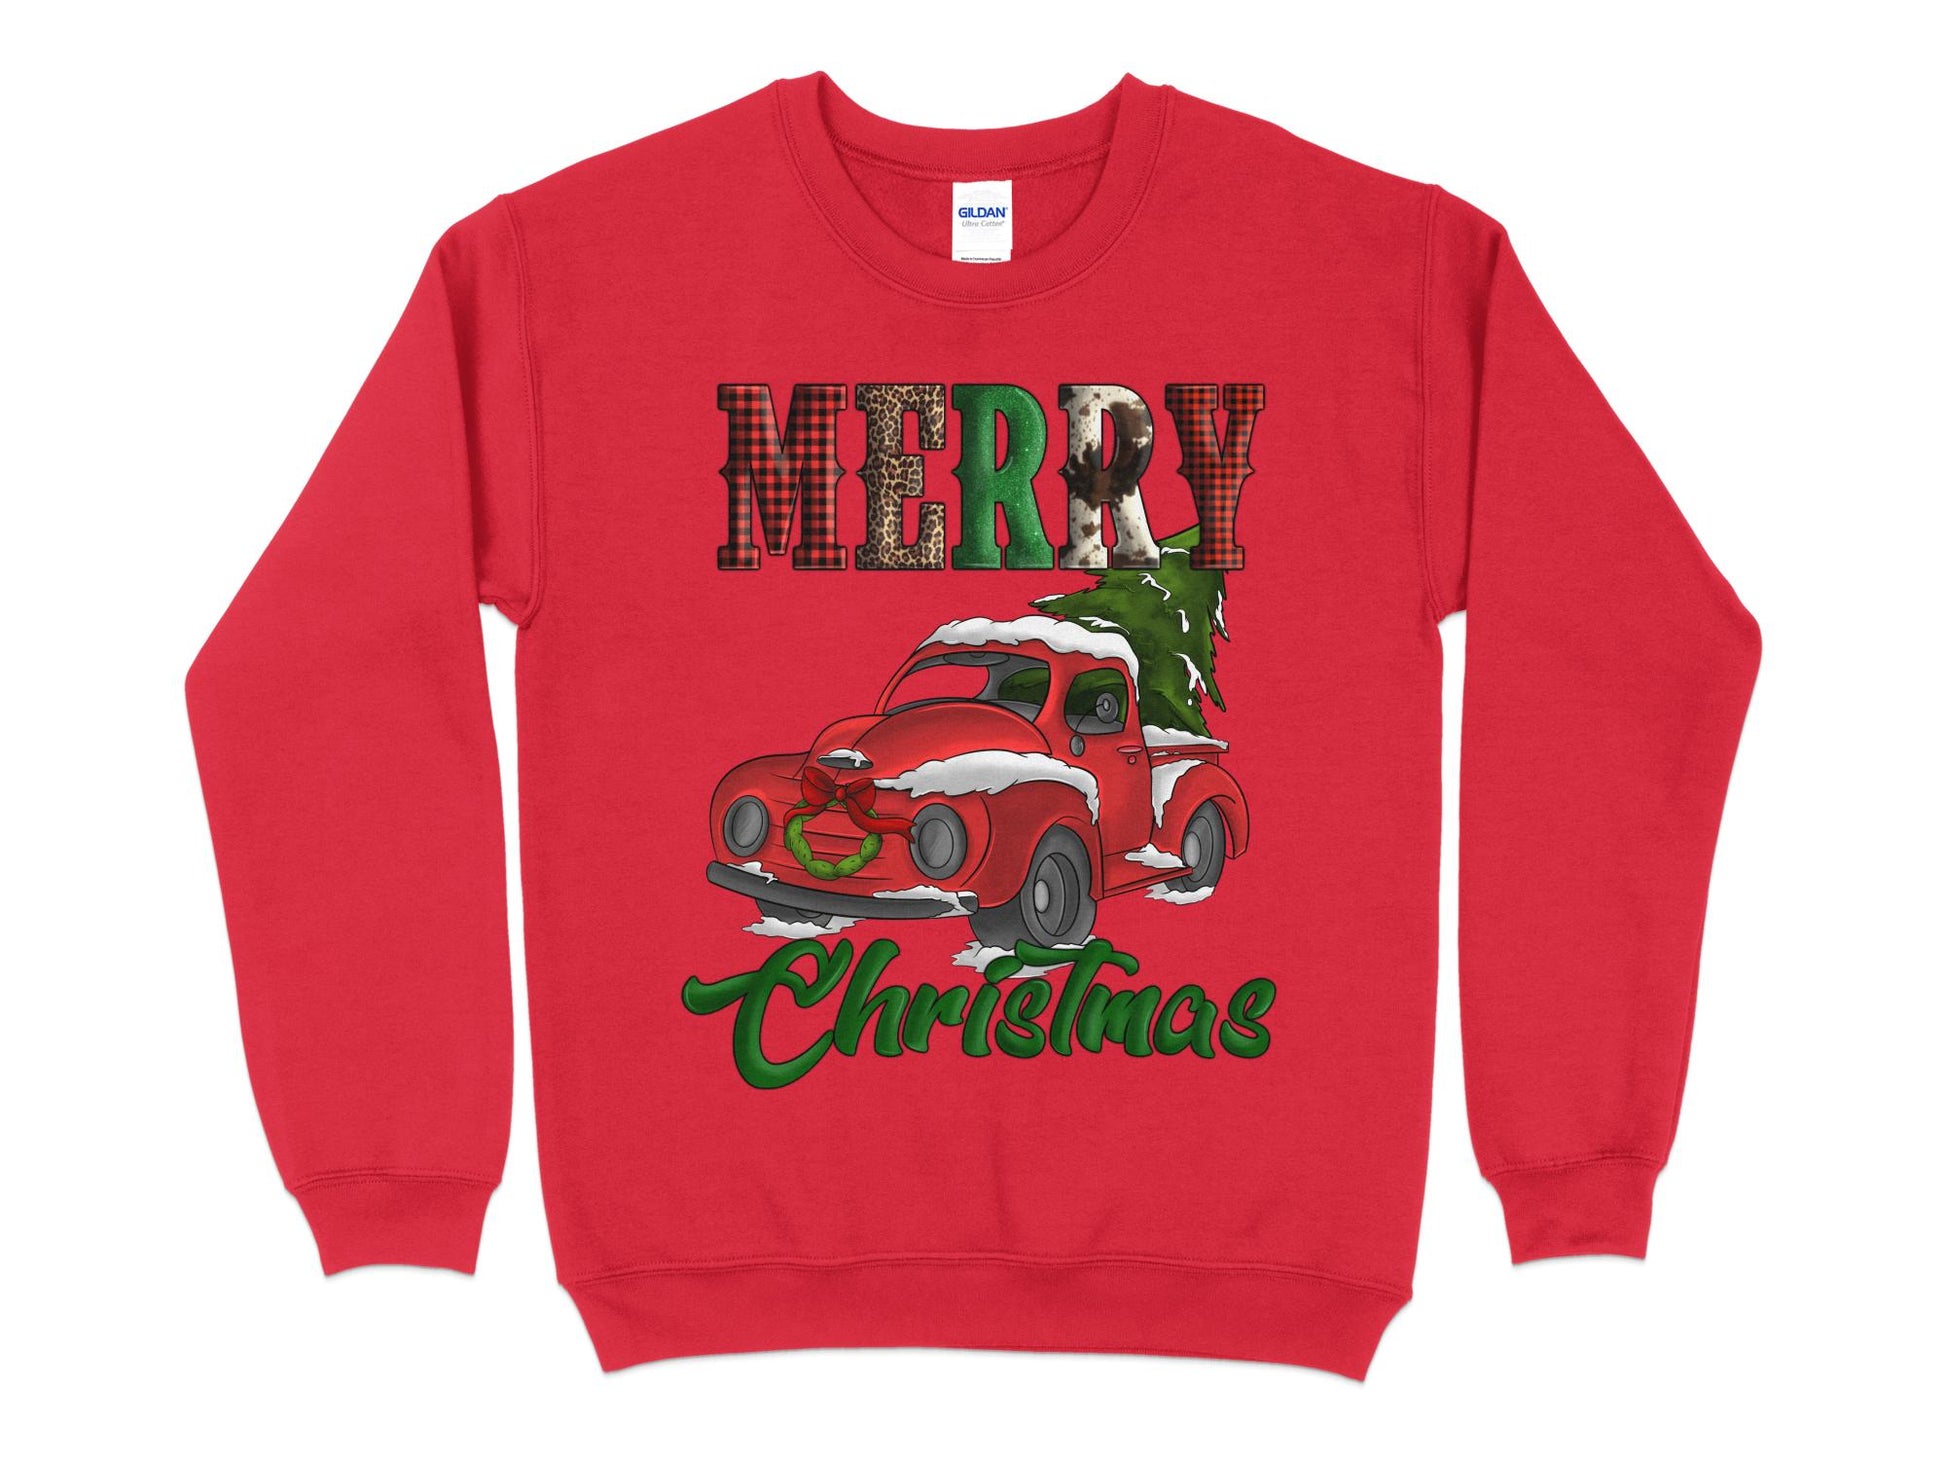 Merry Christmas Red Truck Cow Leopard Buffalo Print Sweatshirt, Christmas Sweater - Mardonyx Sweatshirt S / Red